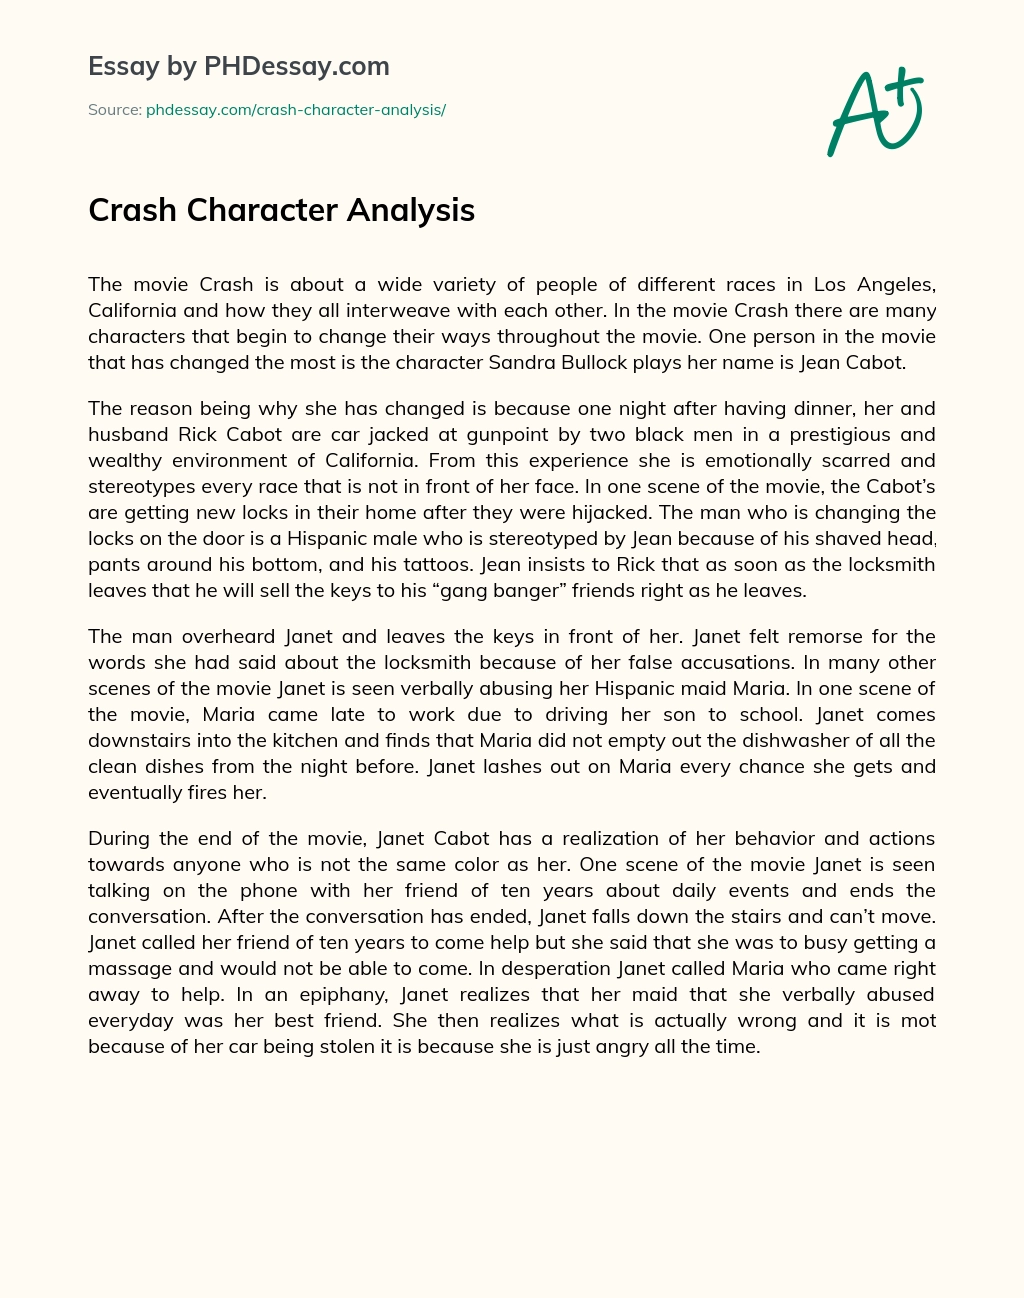 Crash Character Analysis essay